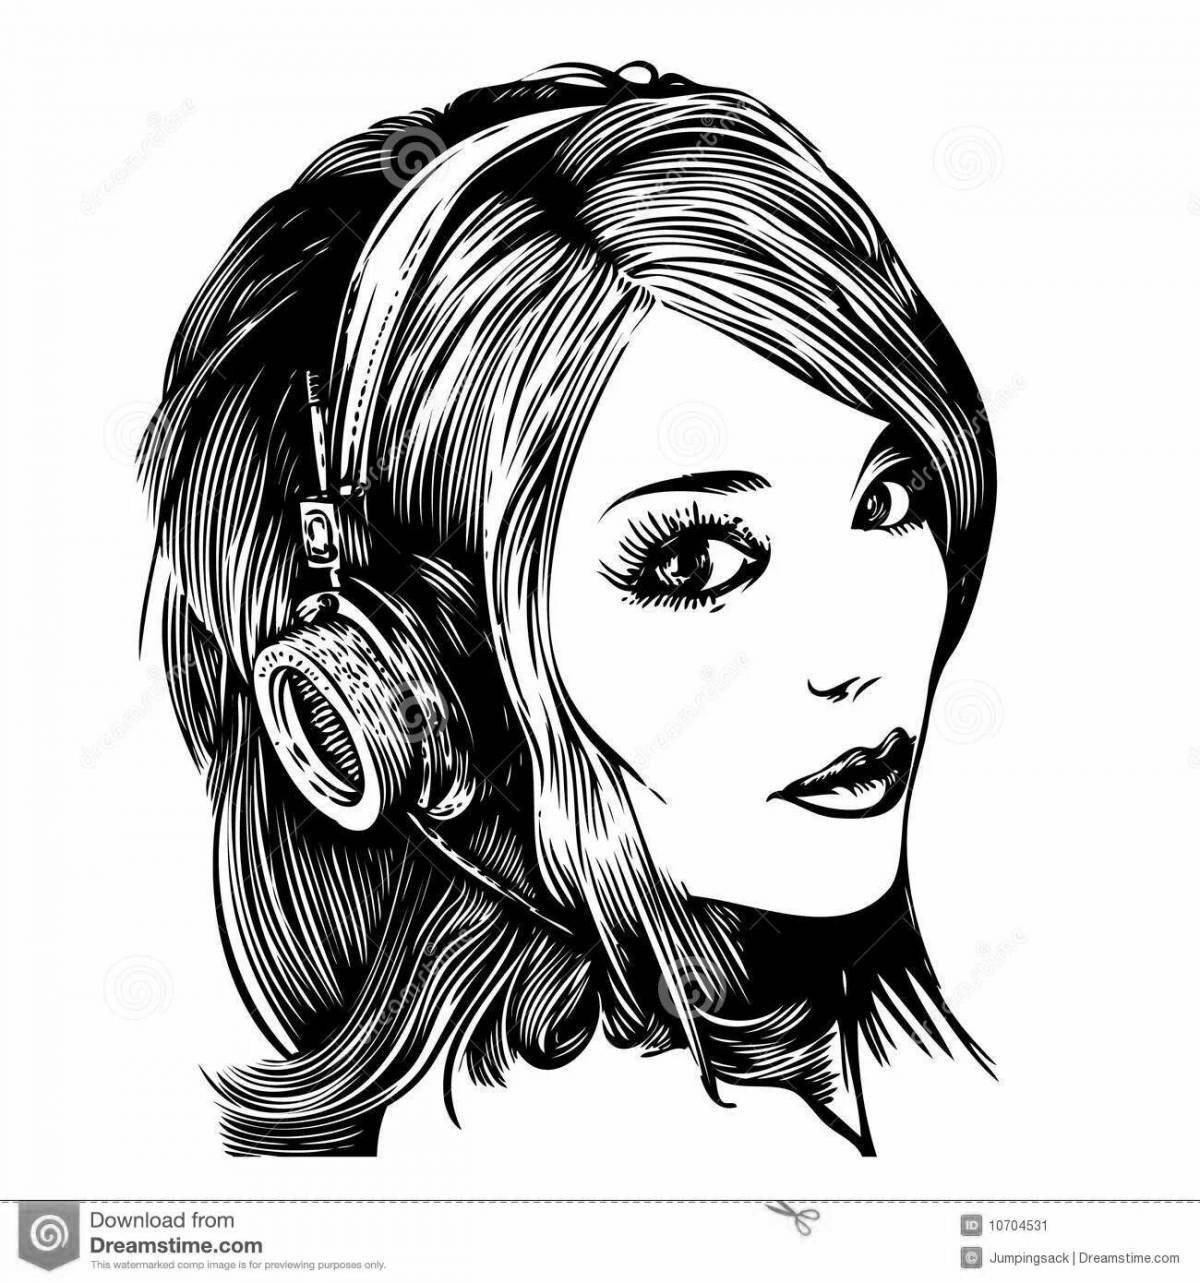 Girl with headphones #1